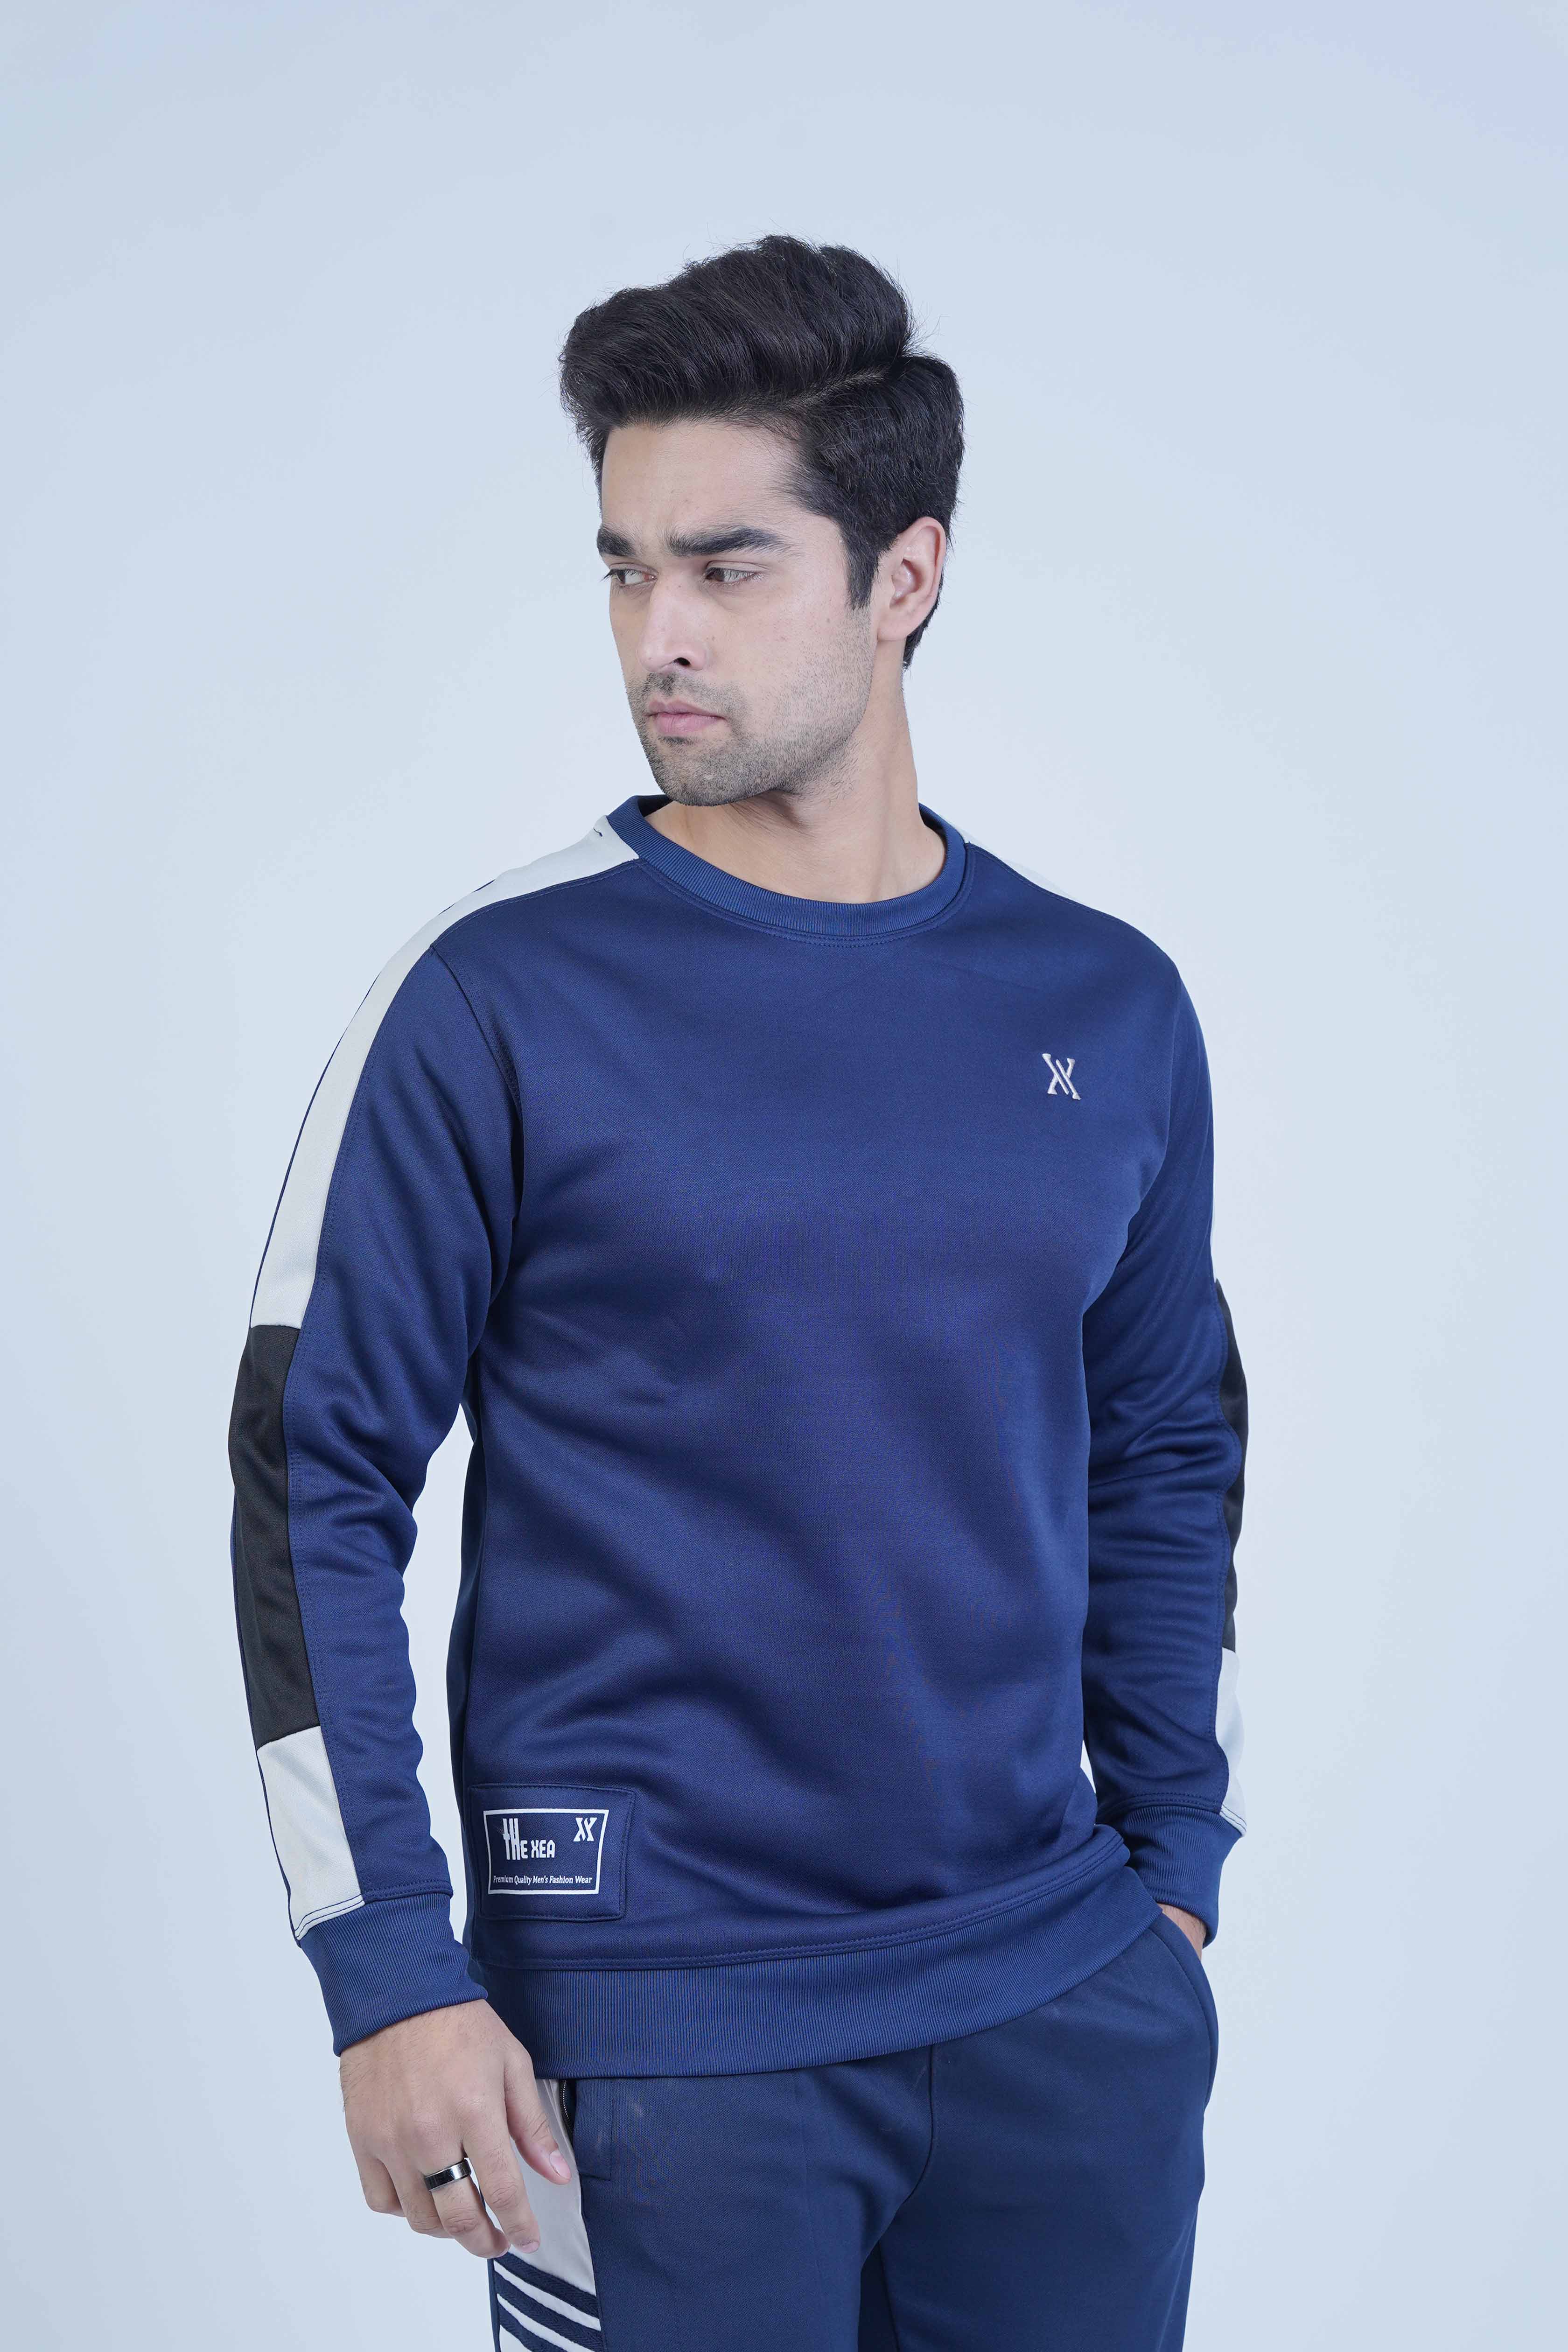 Premium Quality: Eco Smart Navy Blue Sweatshirt by The Xea